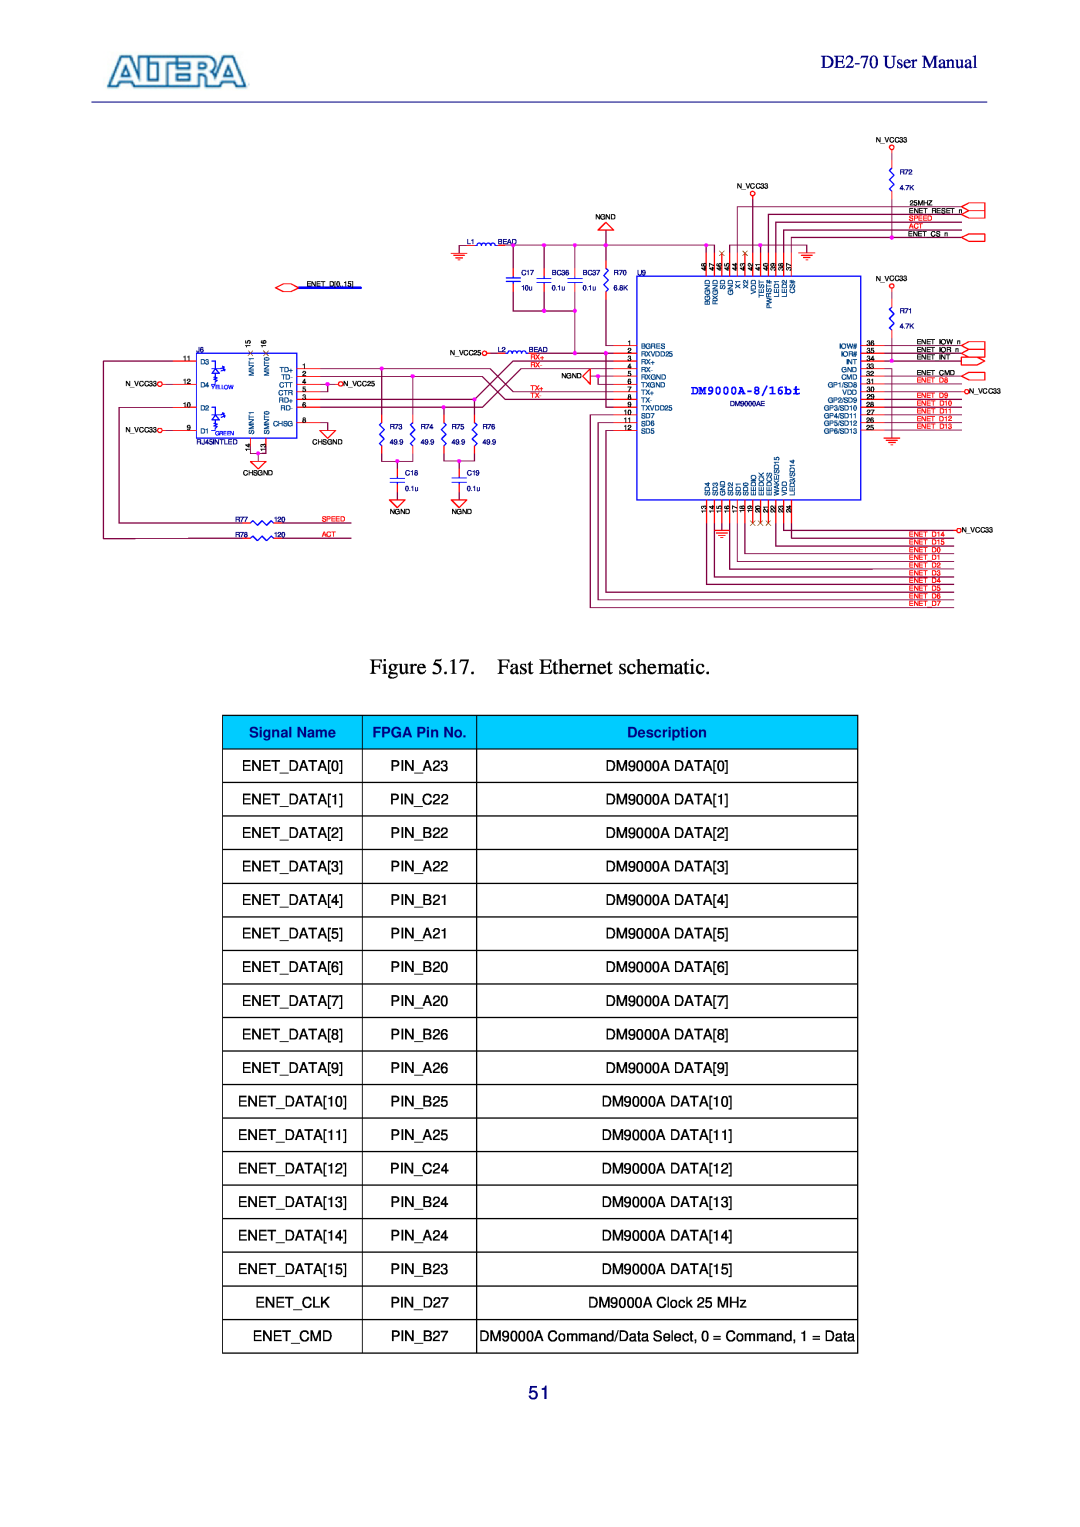 Sigma manual 17. Fast Ethernet schematic, DE2-70 User Manual 